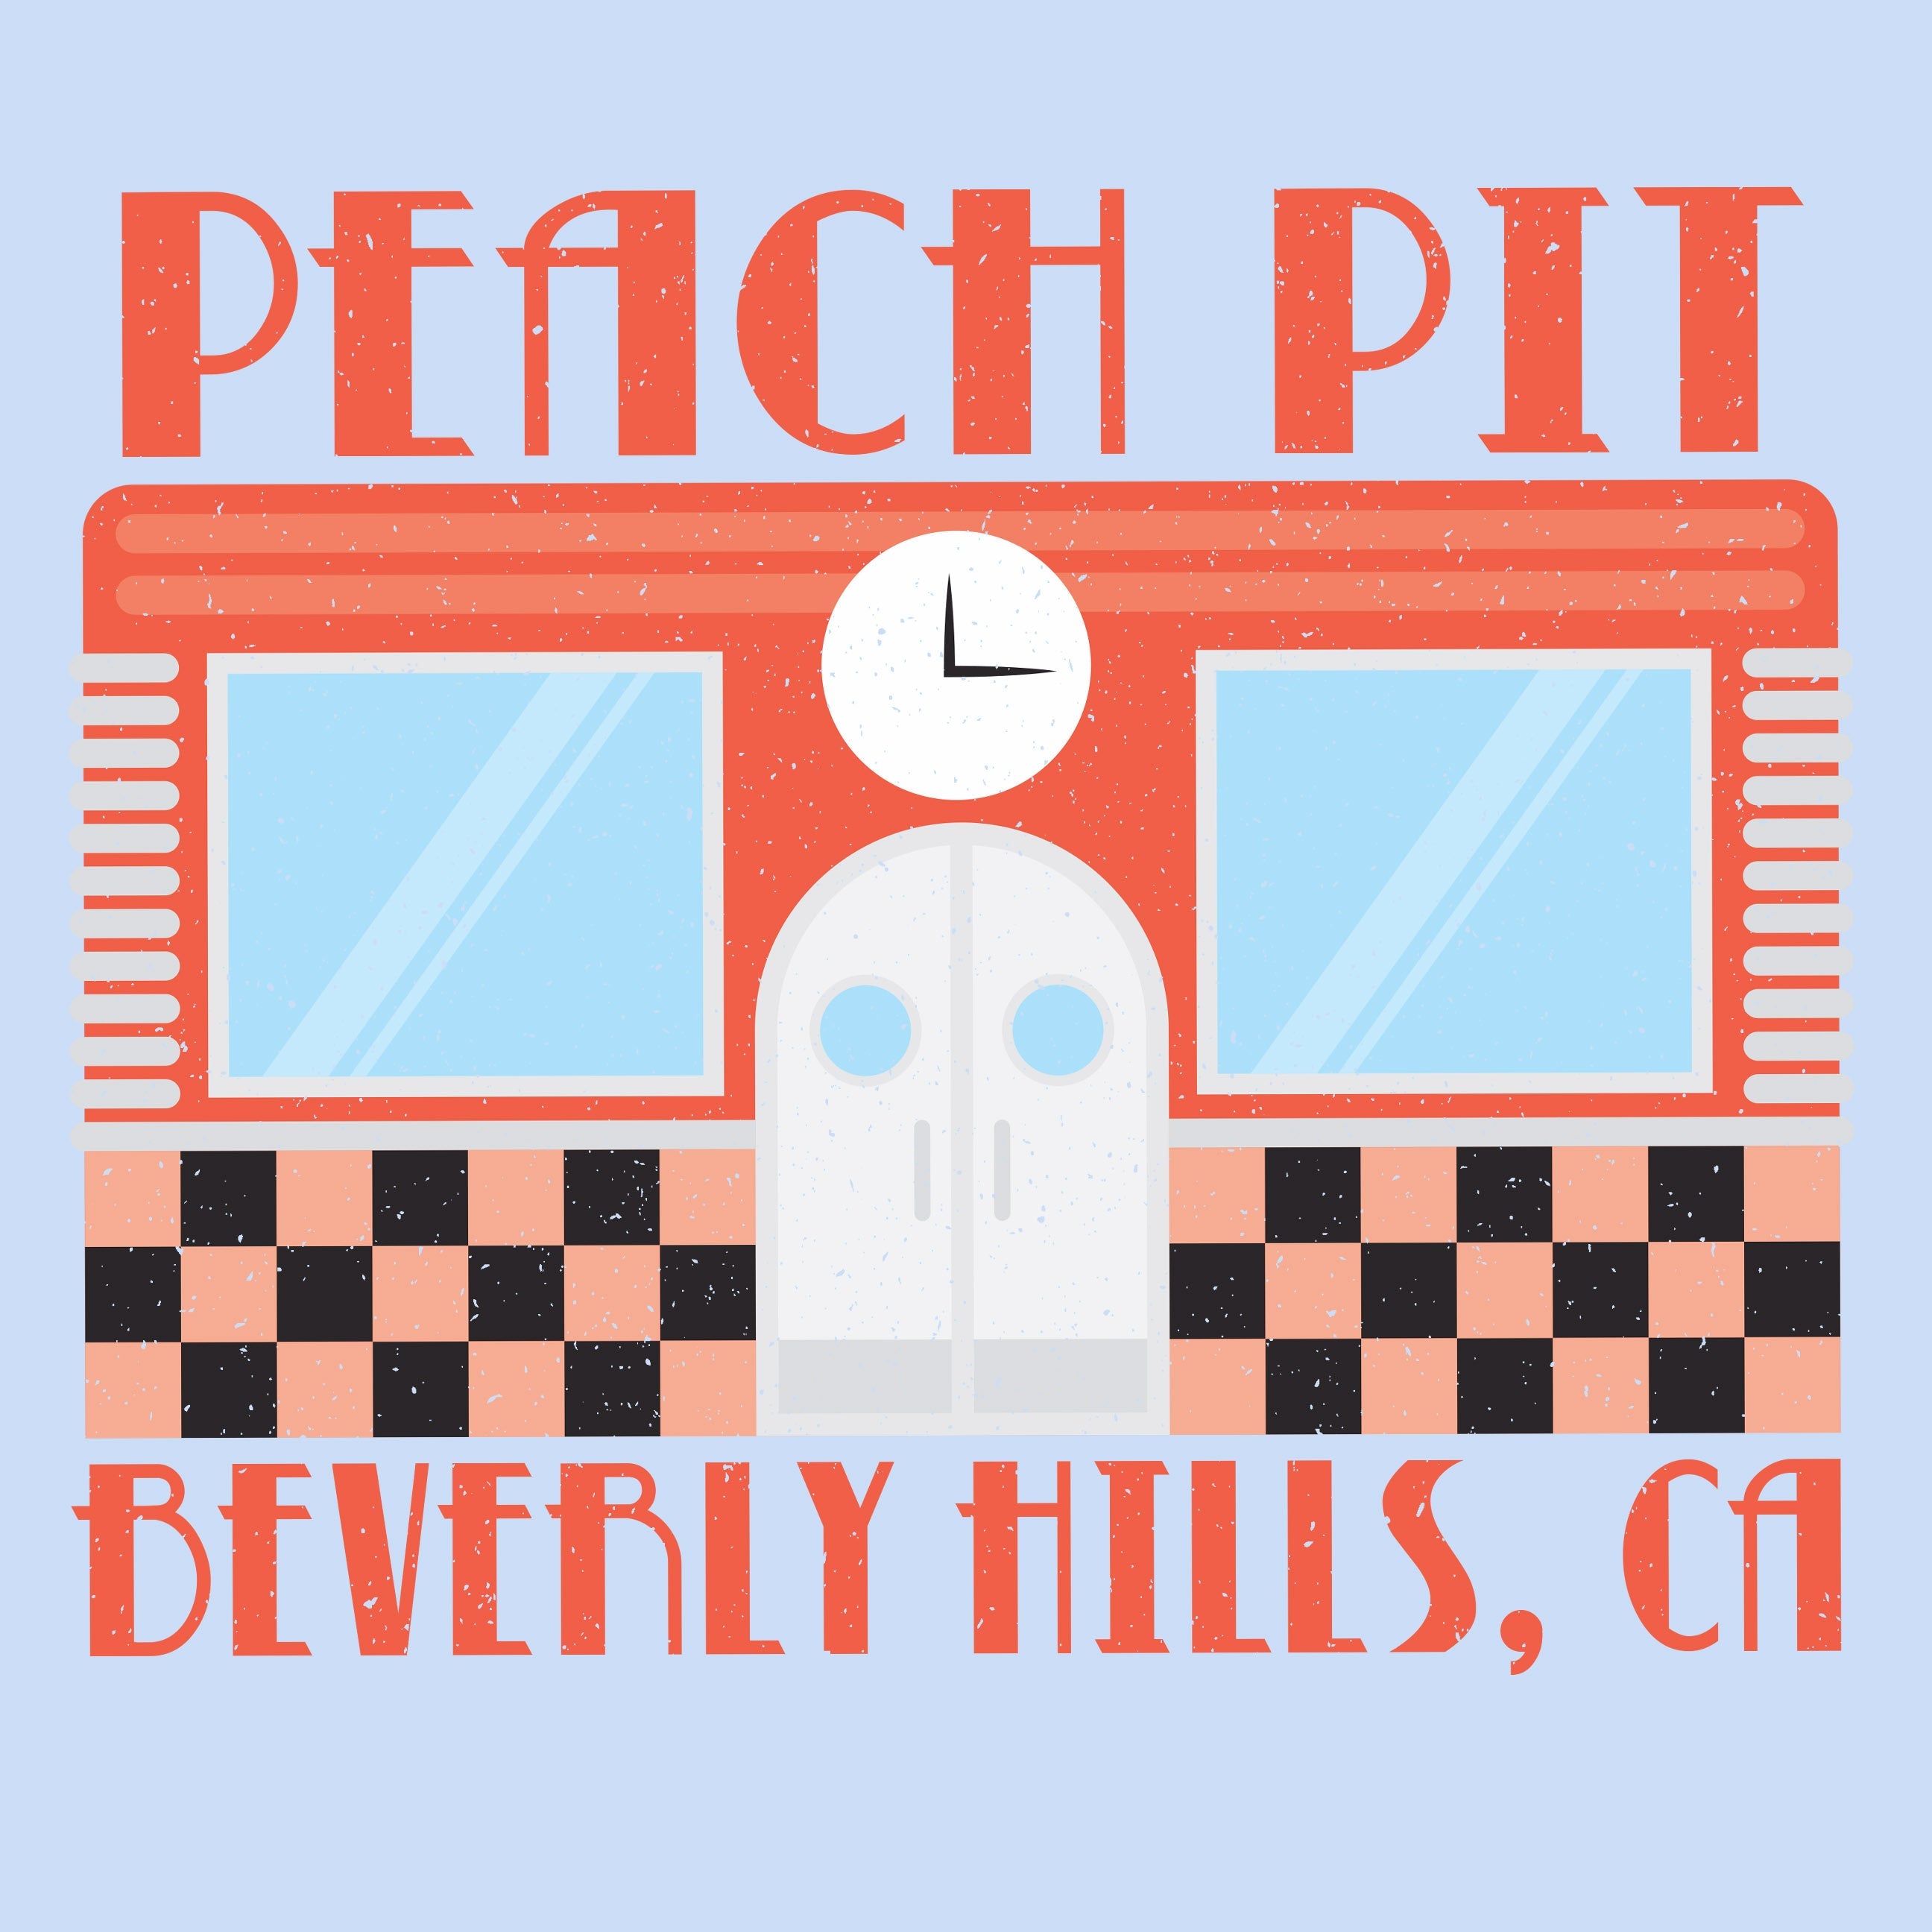 Peach Pit Beverly Hills, CA - Light Blue